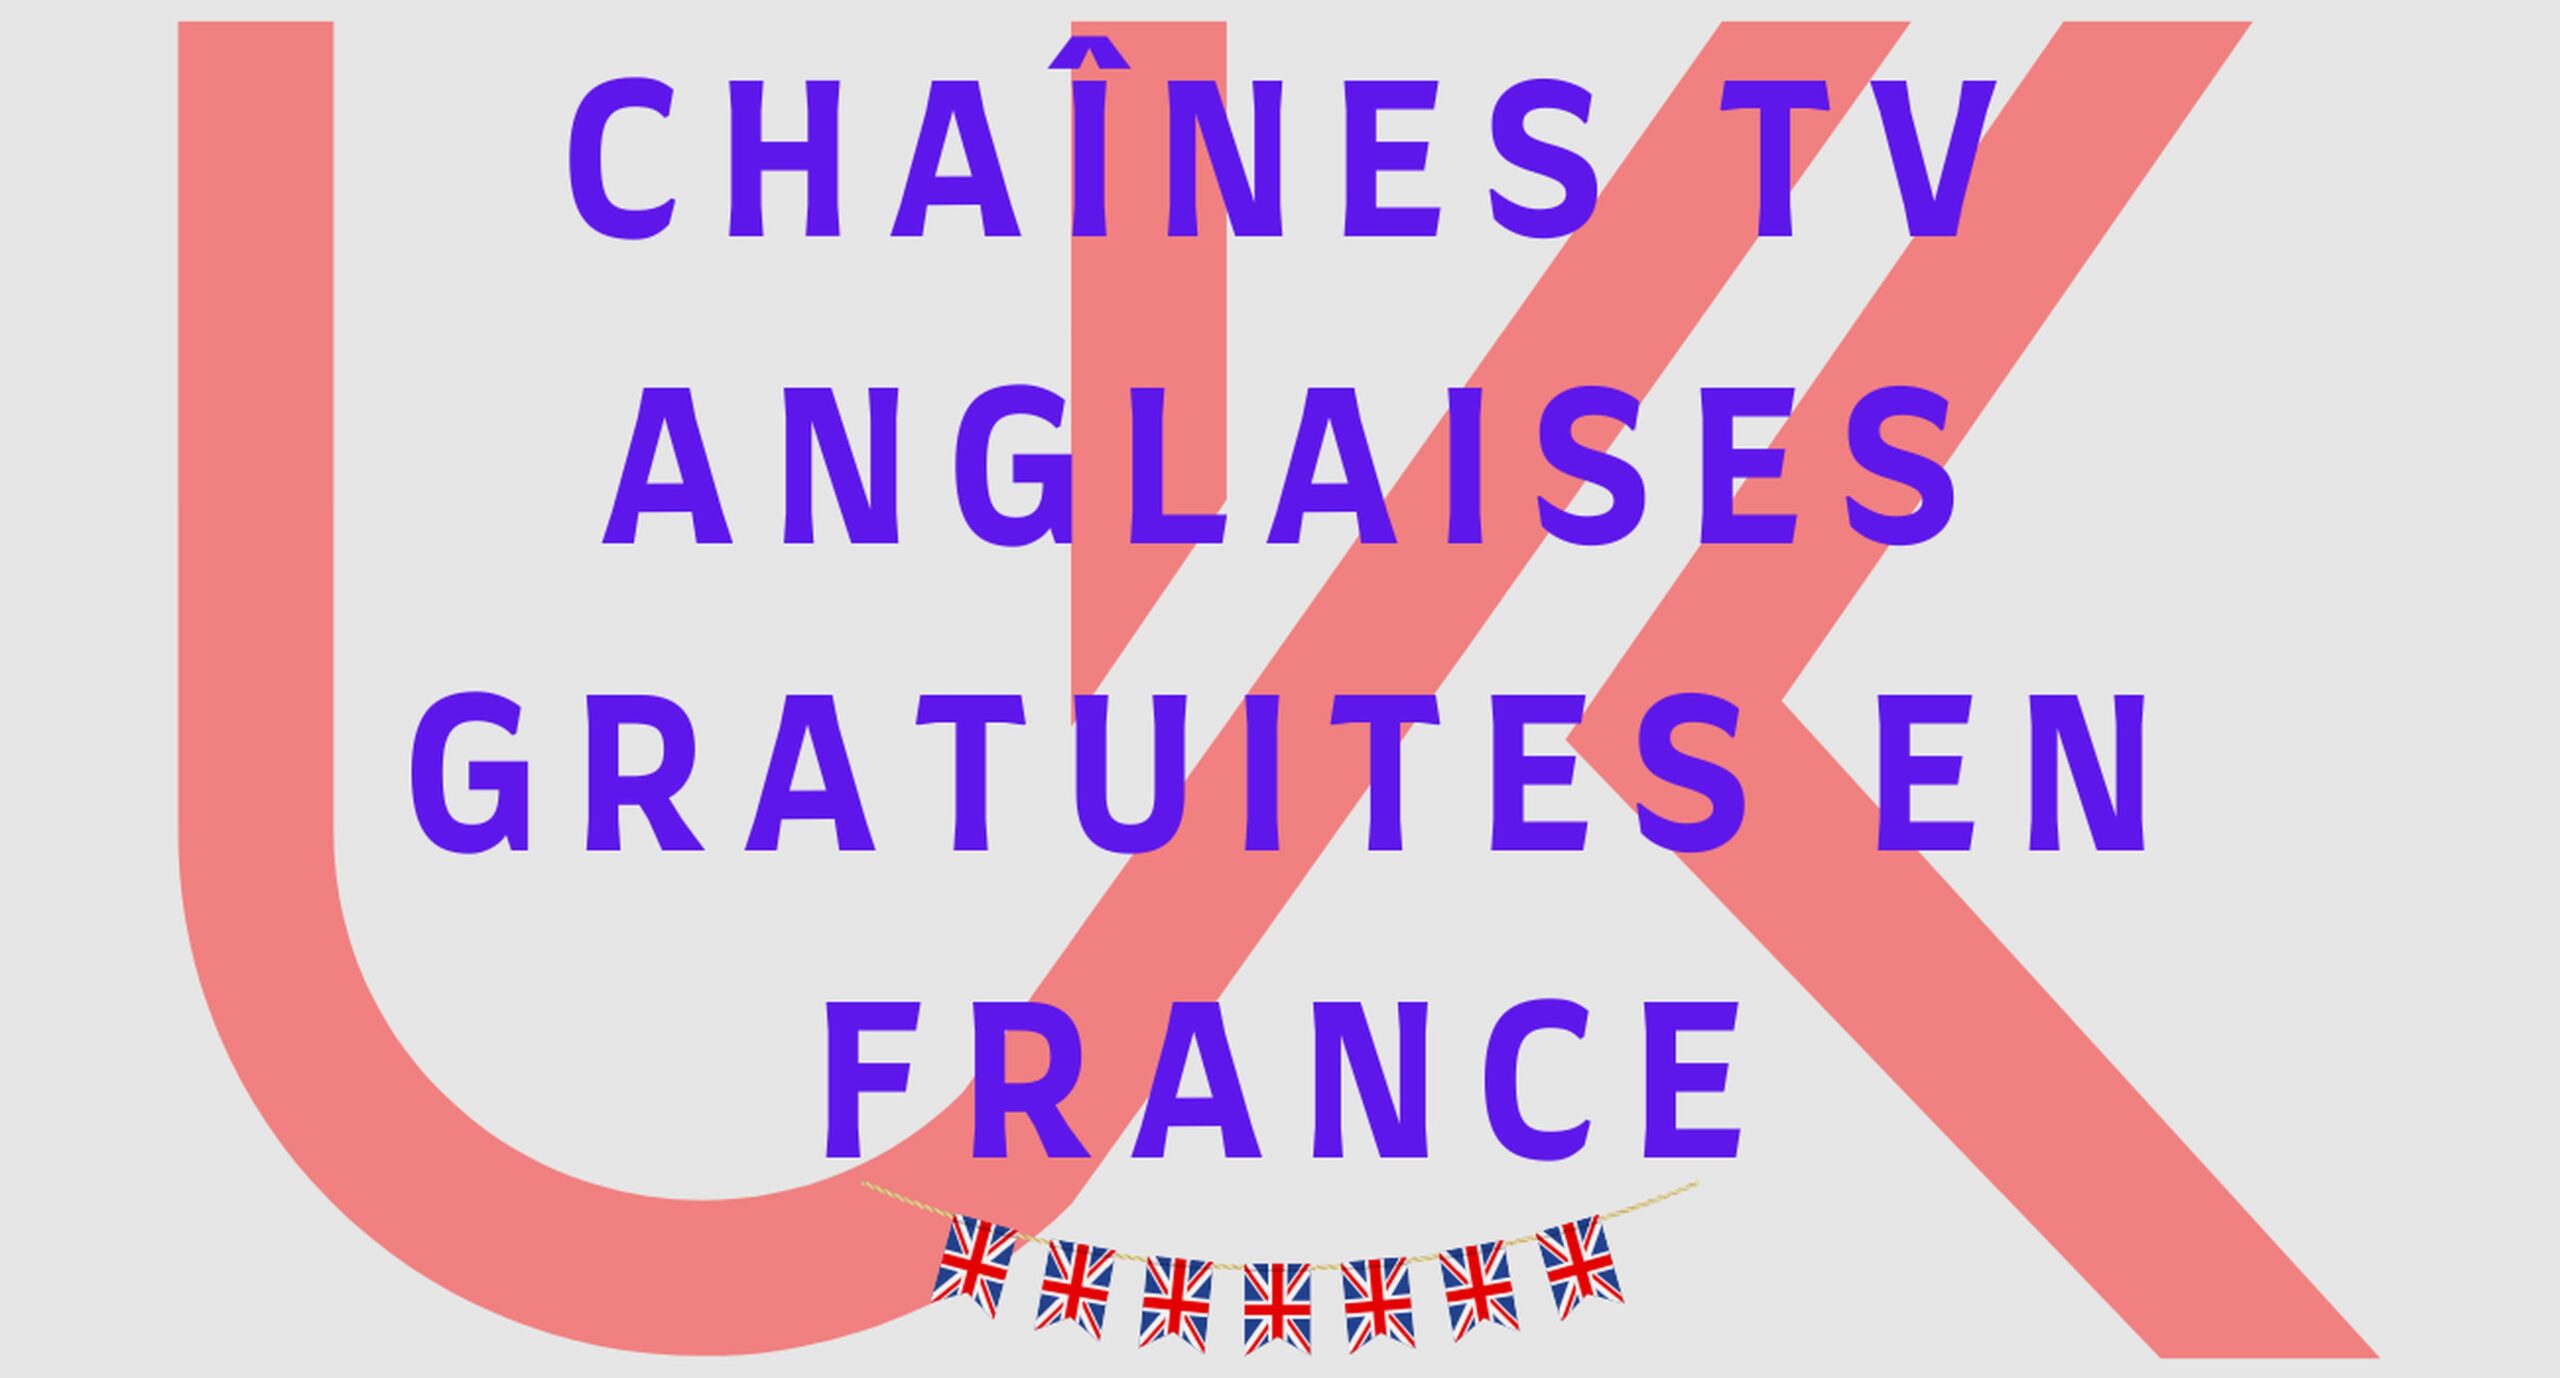 Chaînes TV Anglaises gratuites en France - 55 Chaînes TV disponibles 2